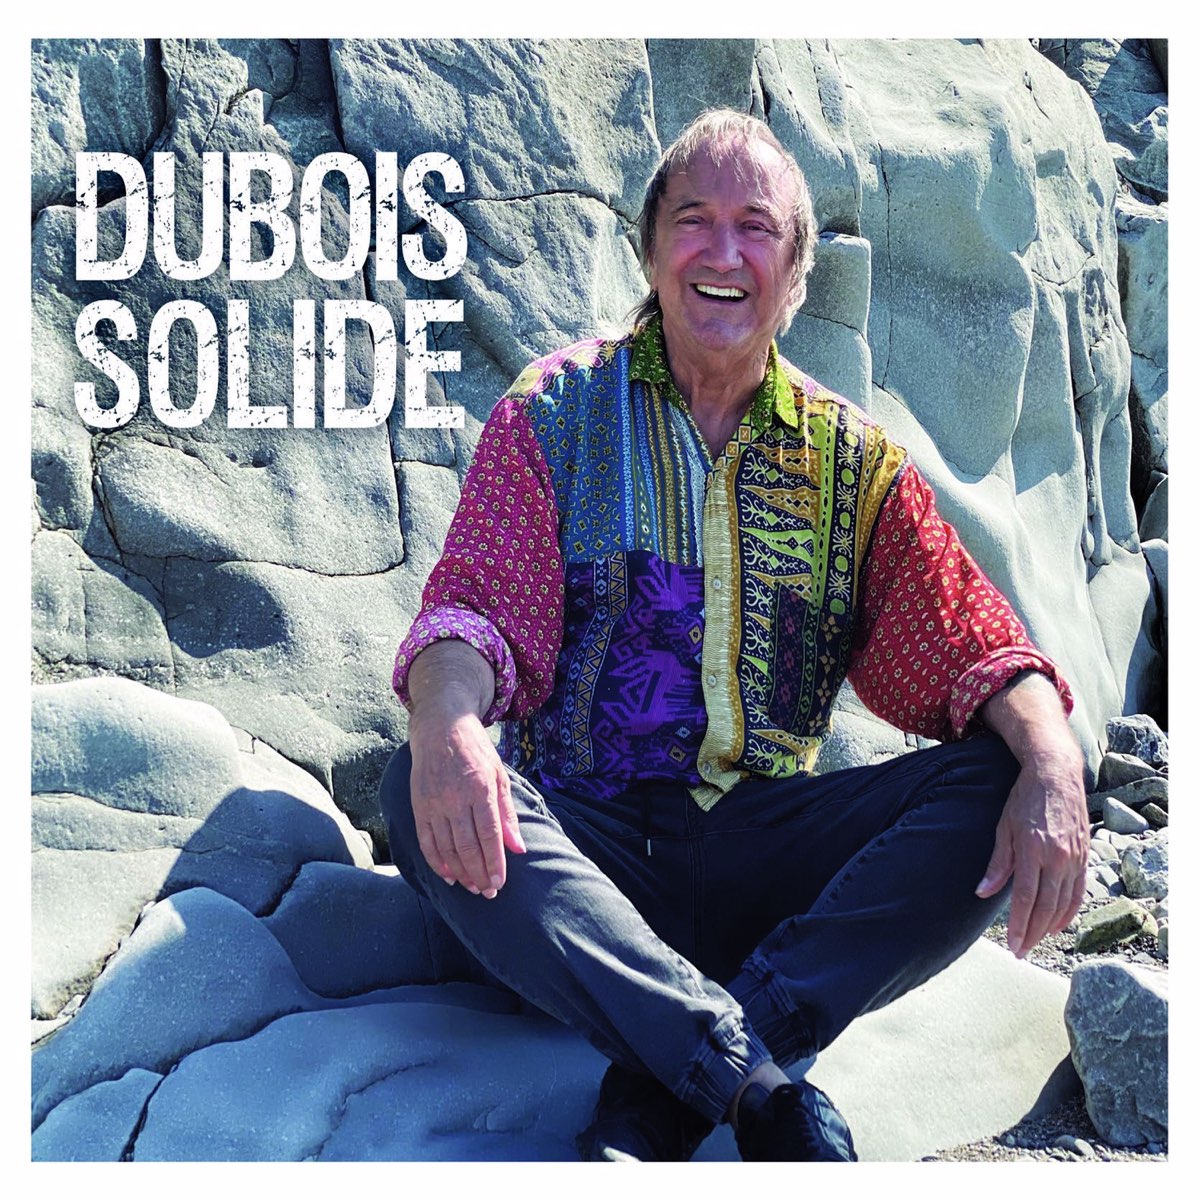 Dubois solide by Claude Dubois on Apple Music